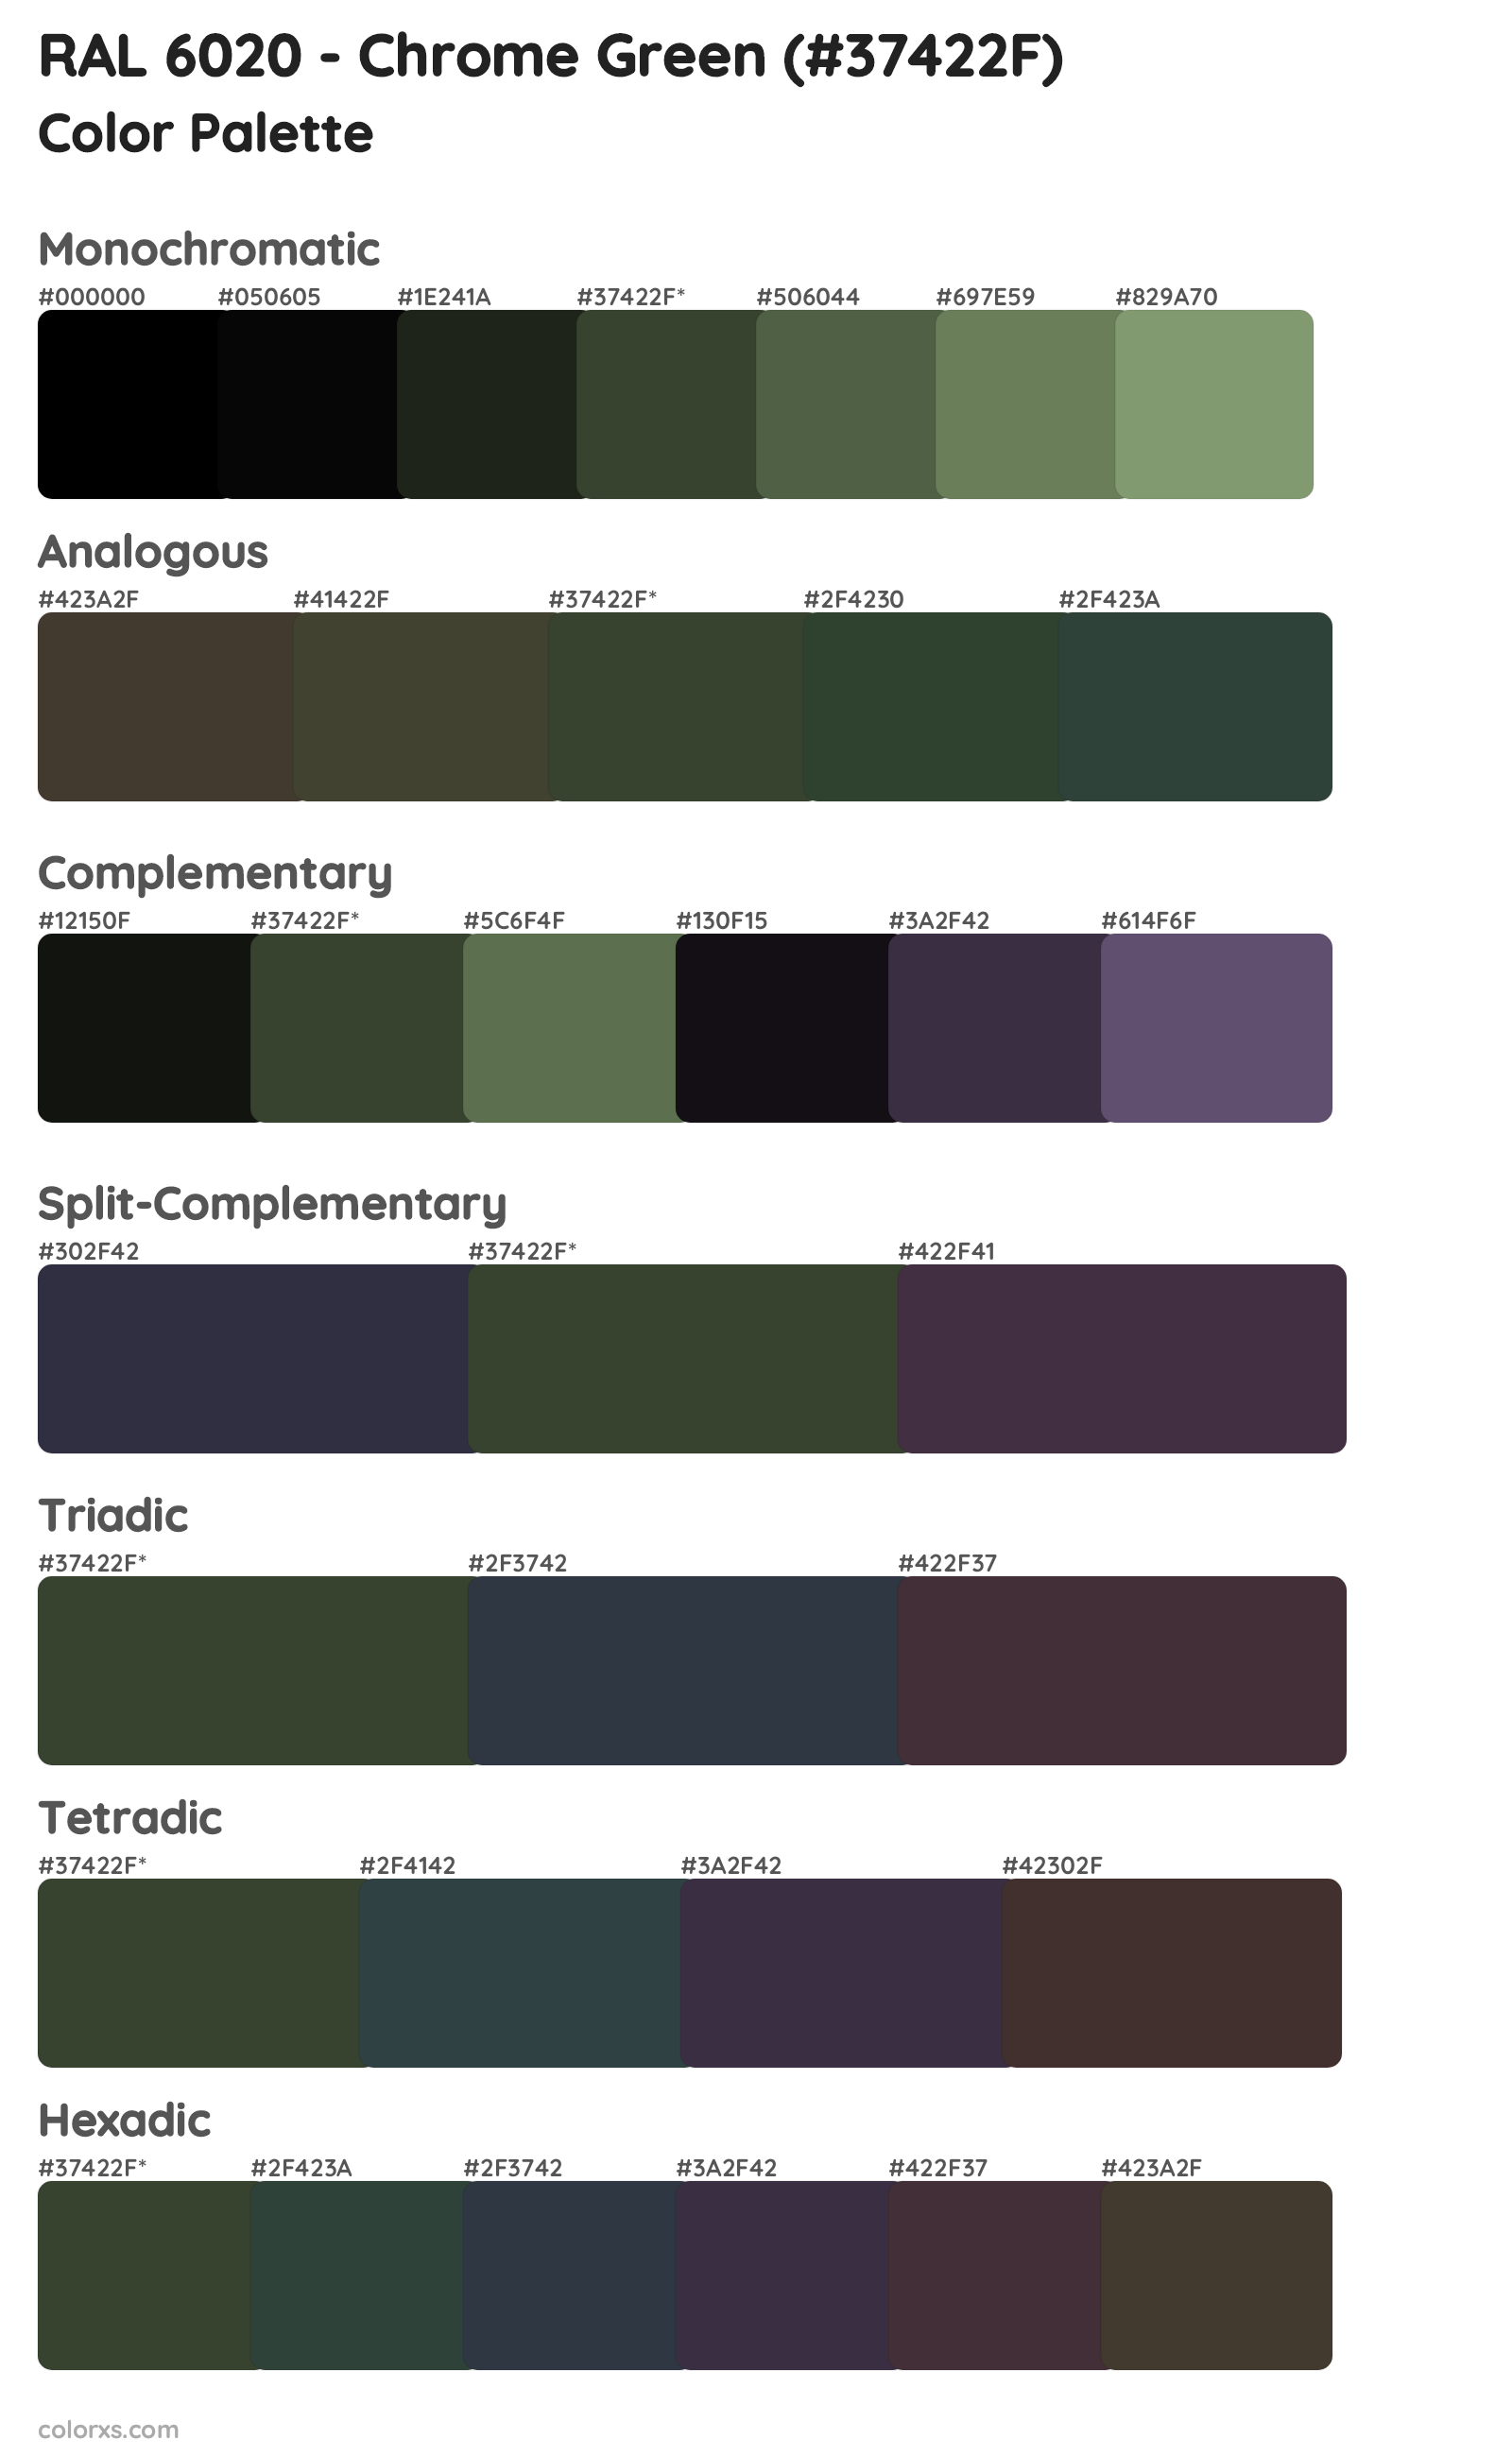 RAL 6020 - Chrome Green Color Scheme Palettes